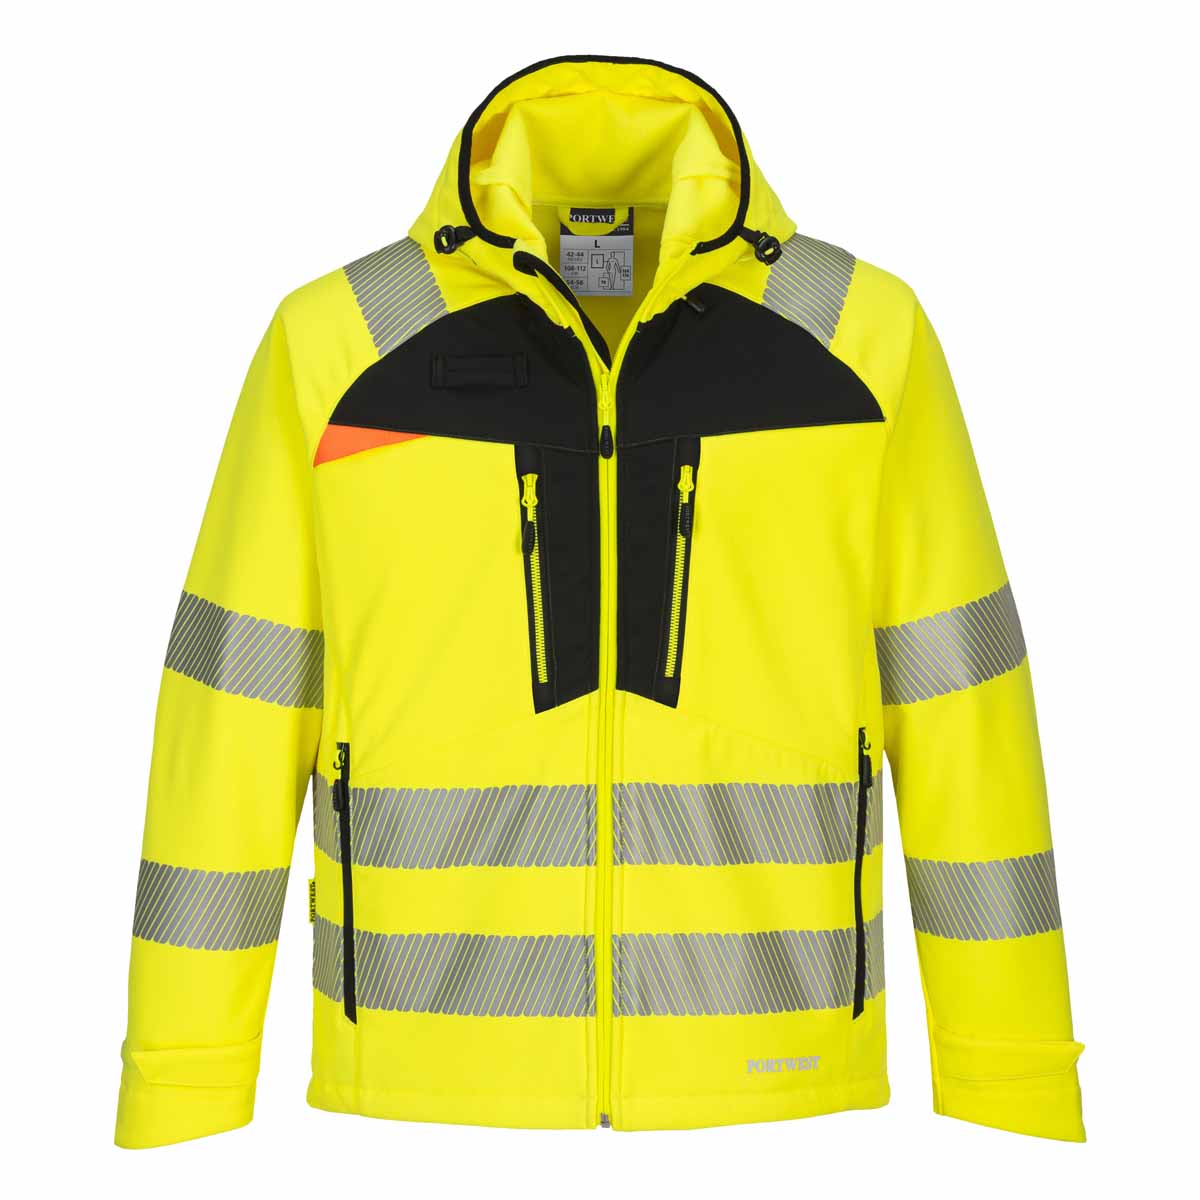 Hi Viz Orange Workwear High Visibility Railtrack Tops Jackets Trousers GORT 3279 